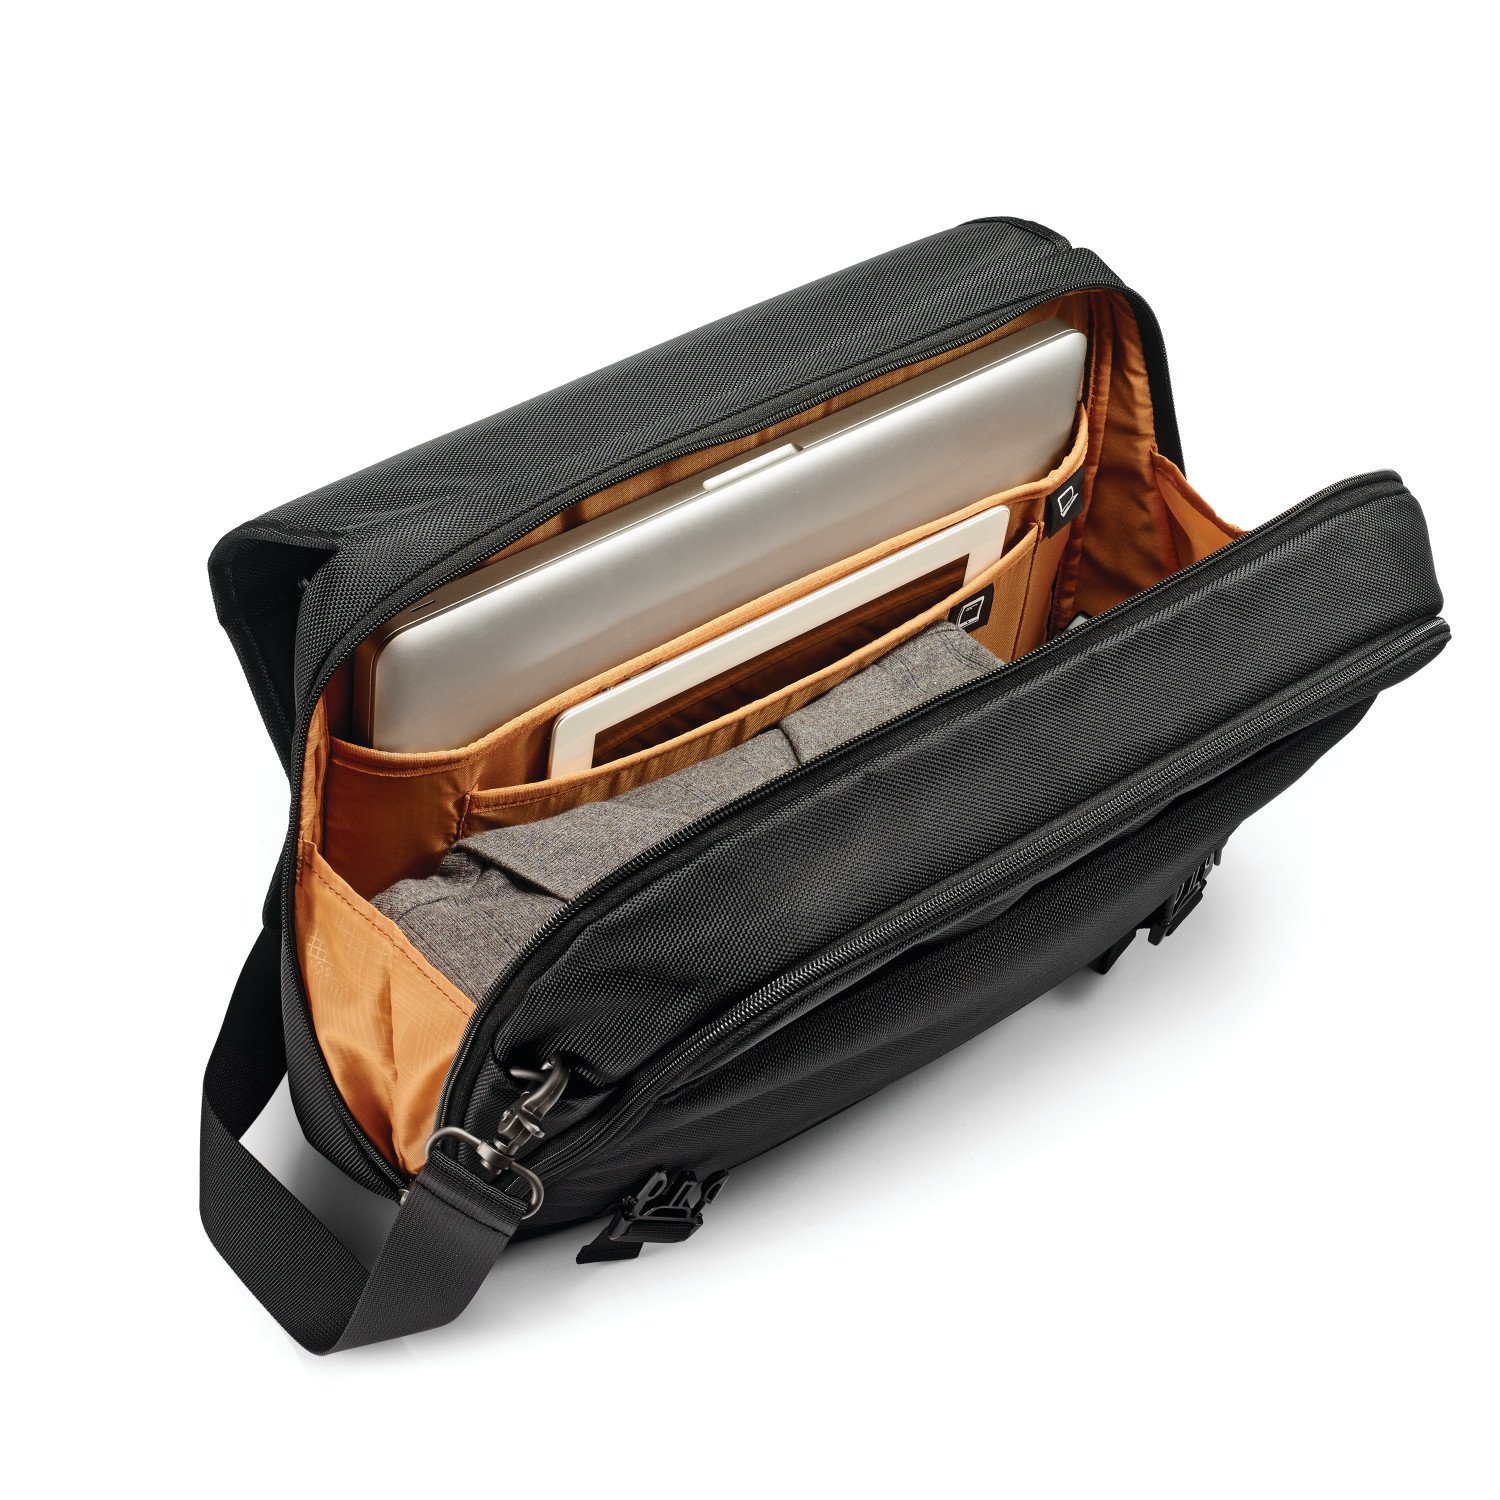 Samsonite Kombi Flapover Briefcase, Black/Brown, One Size